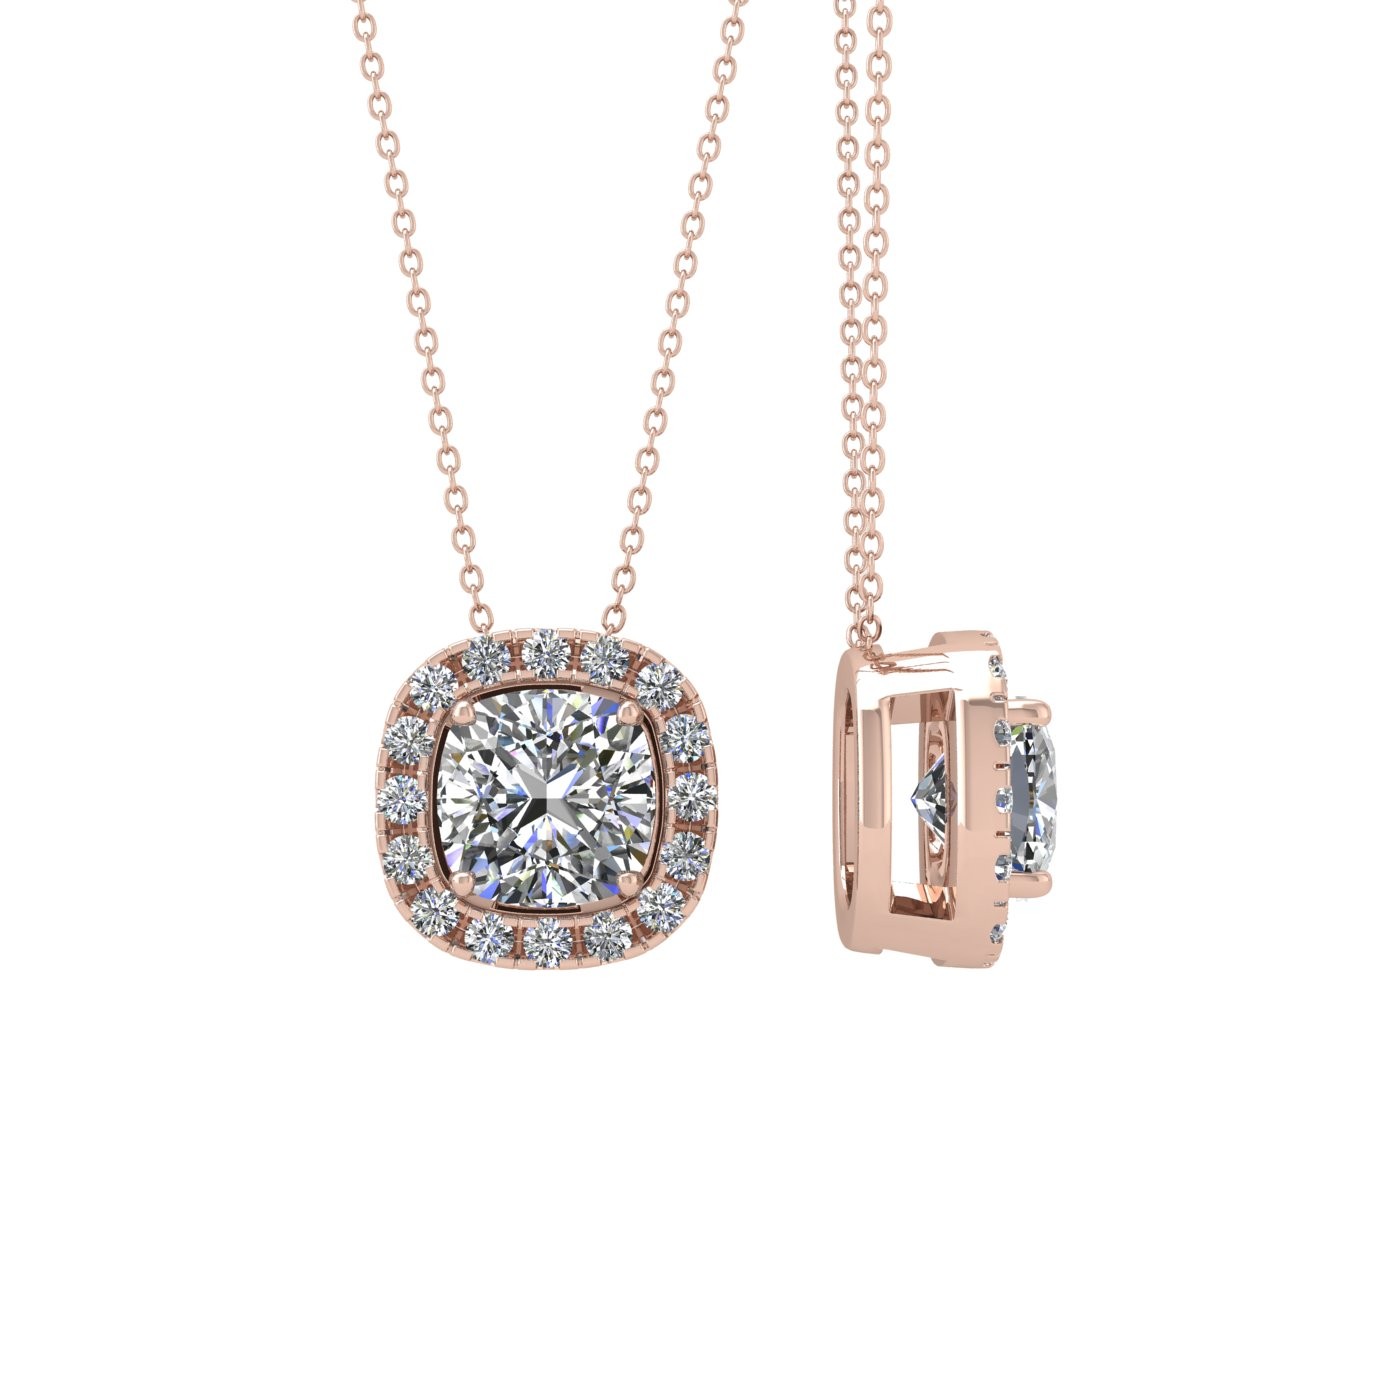 18k rose gold  0,5 ct 4 prongs cushion shape diamond pendant with diamond pavÉ set halo